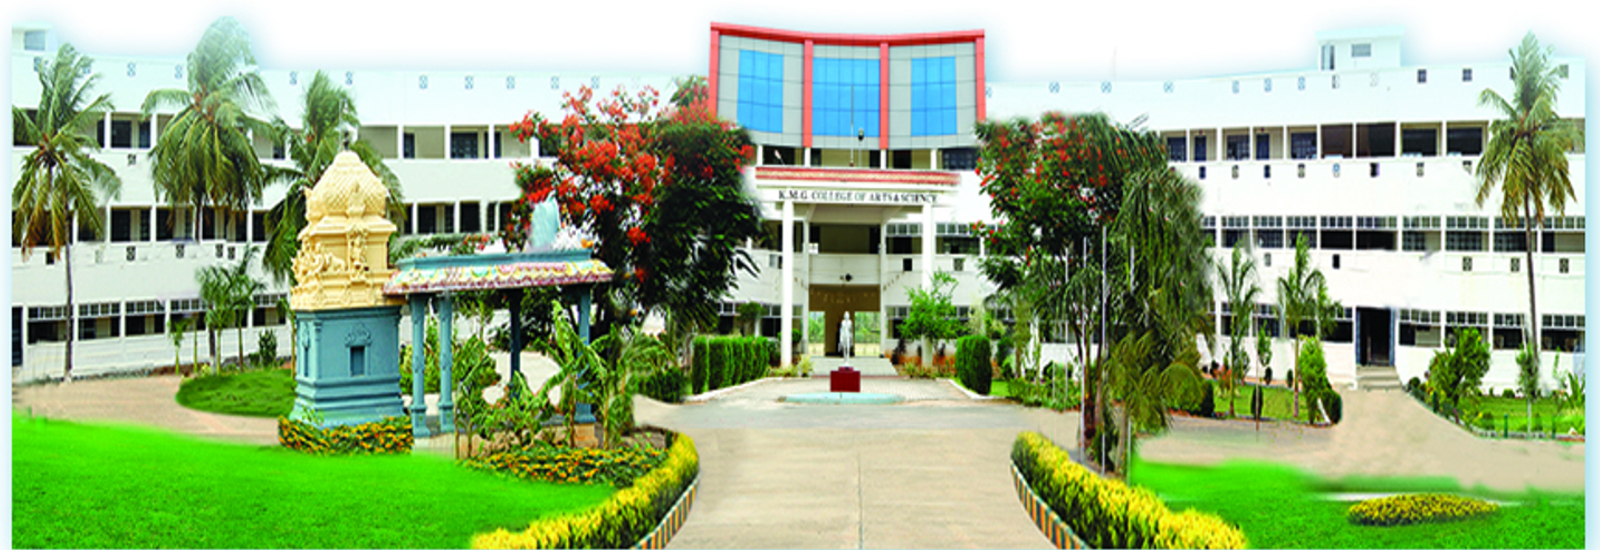 K.M.G. College of Arts and Science, Katpadi Image